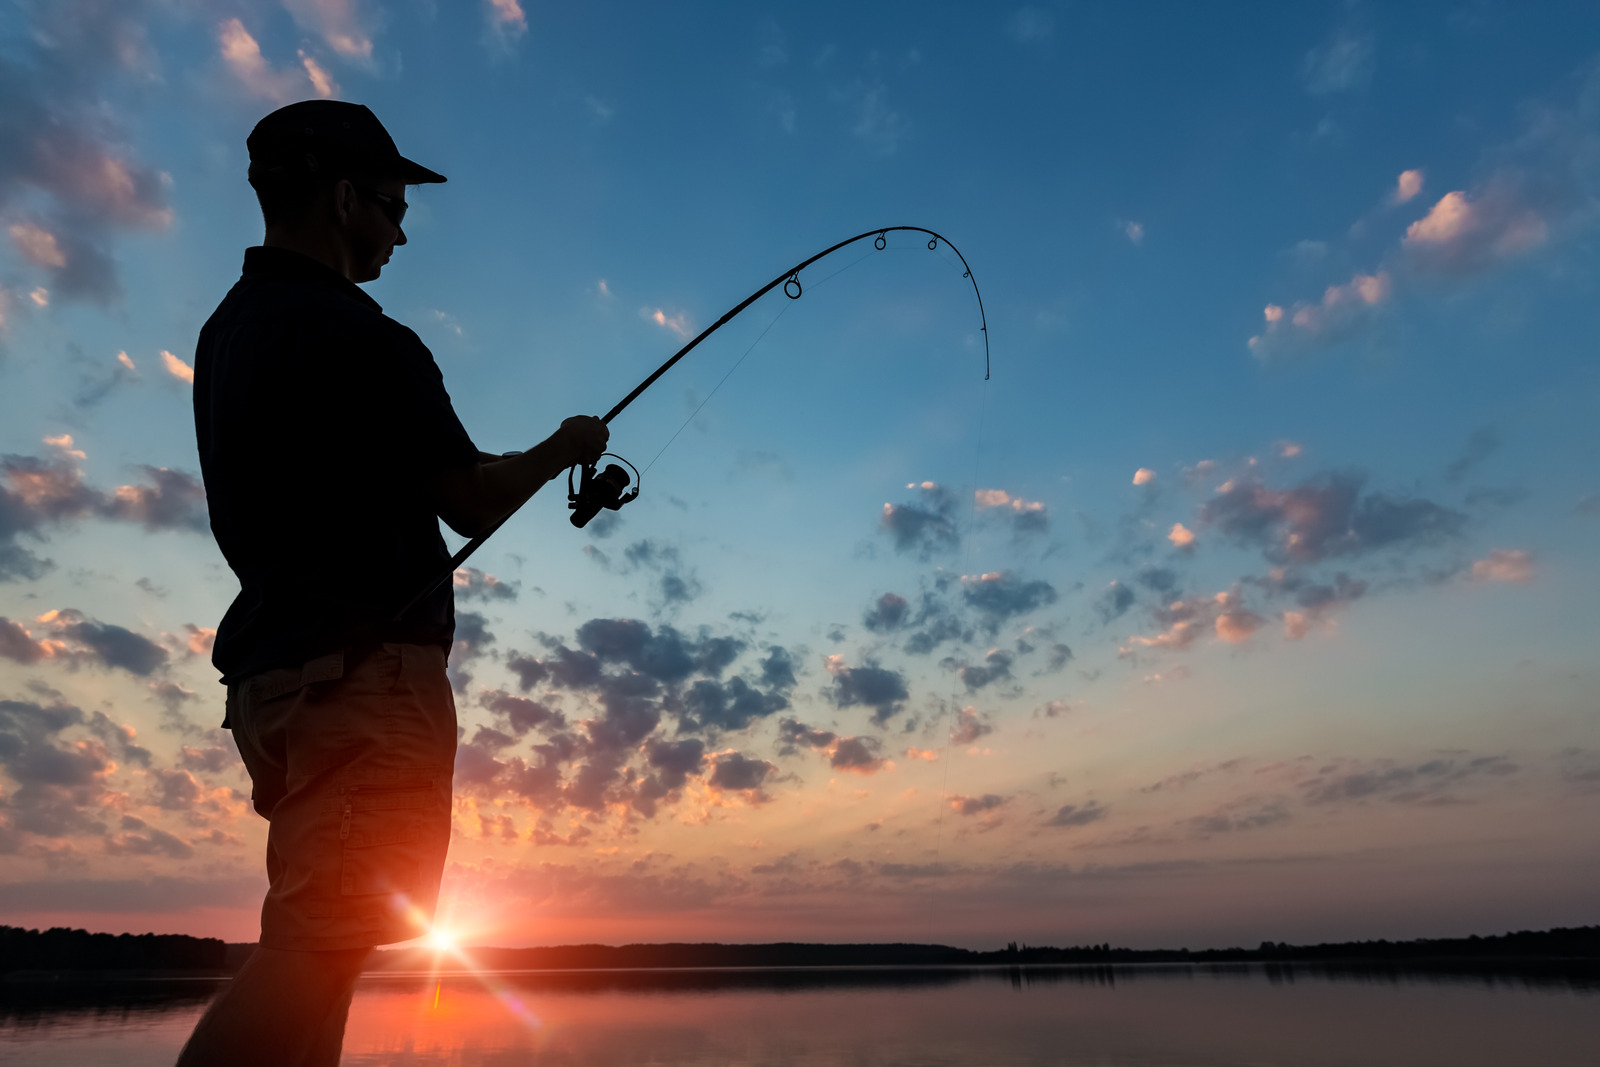 fishing rod lake fisherman men sport summer lure sunset water outdoor sunrise fish - stock image